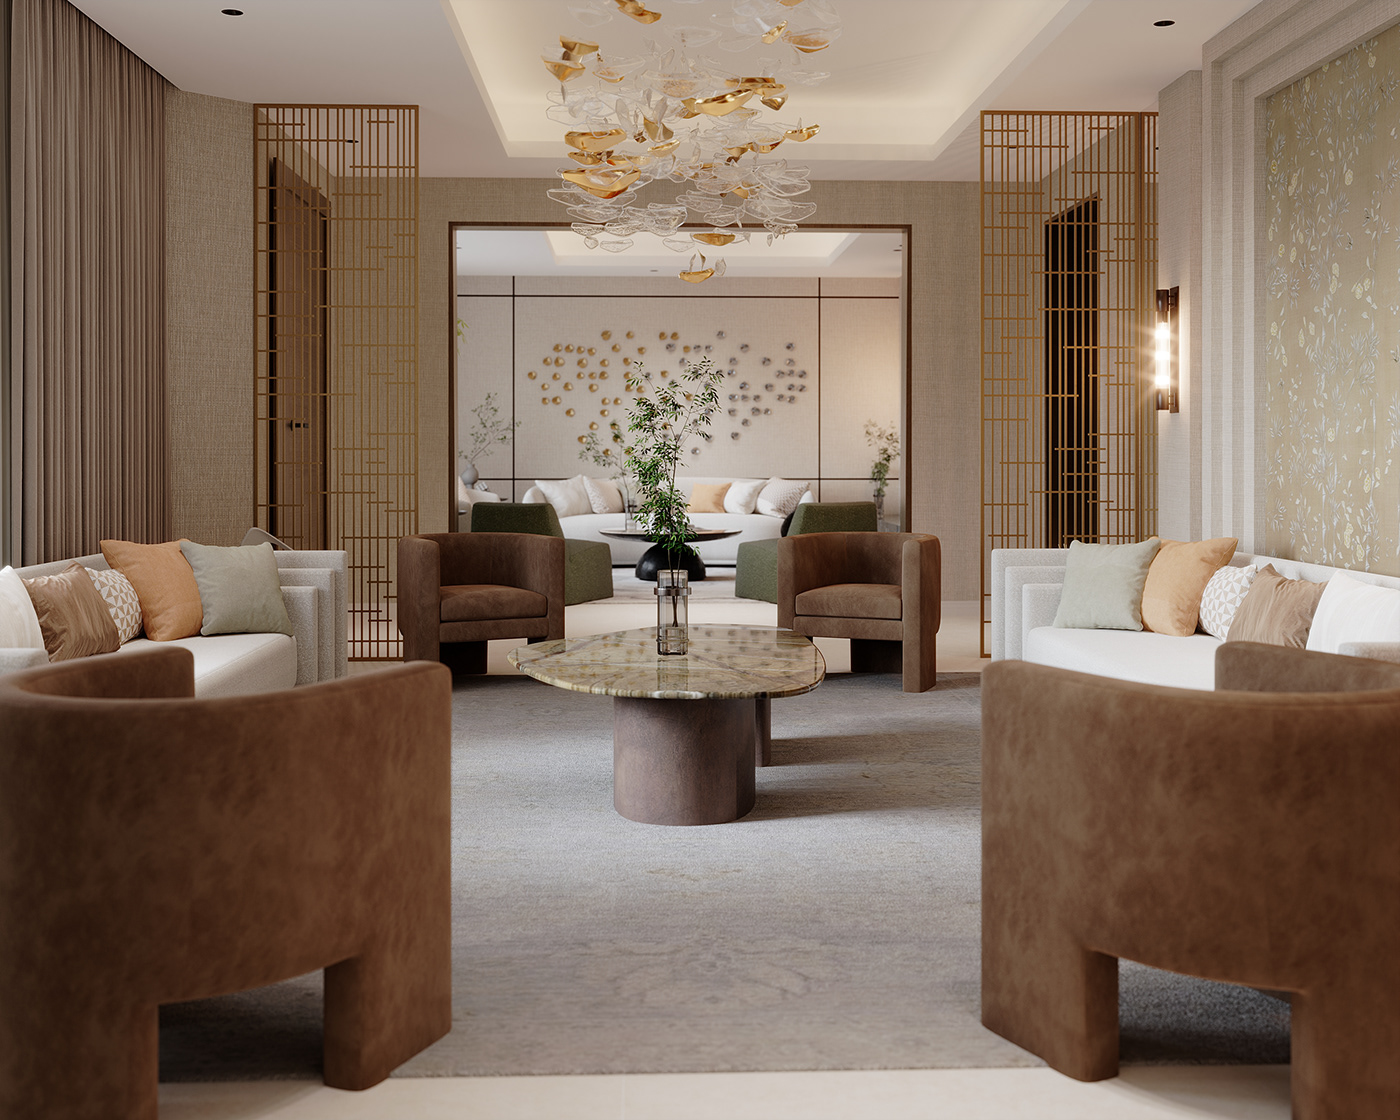 MAJLIS interior design  modern Villa villa design saudiarabia KSA majlis design visualization 3ds max